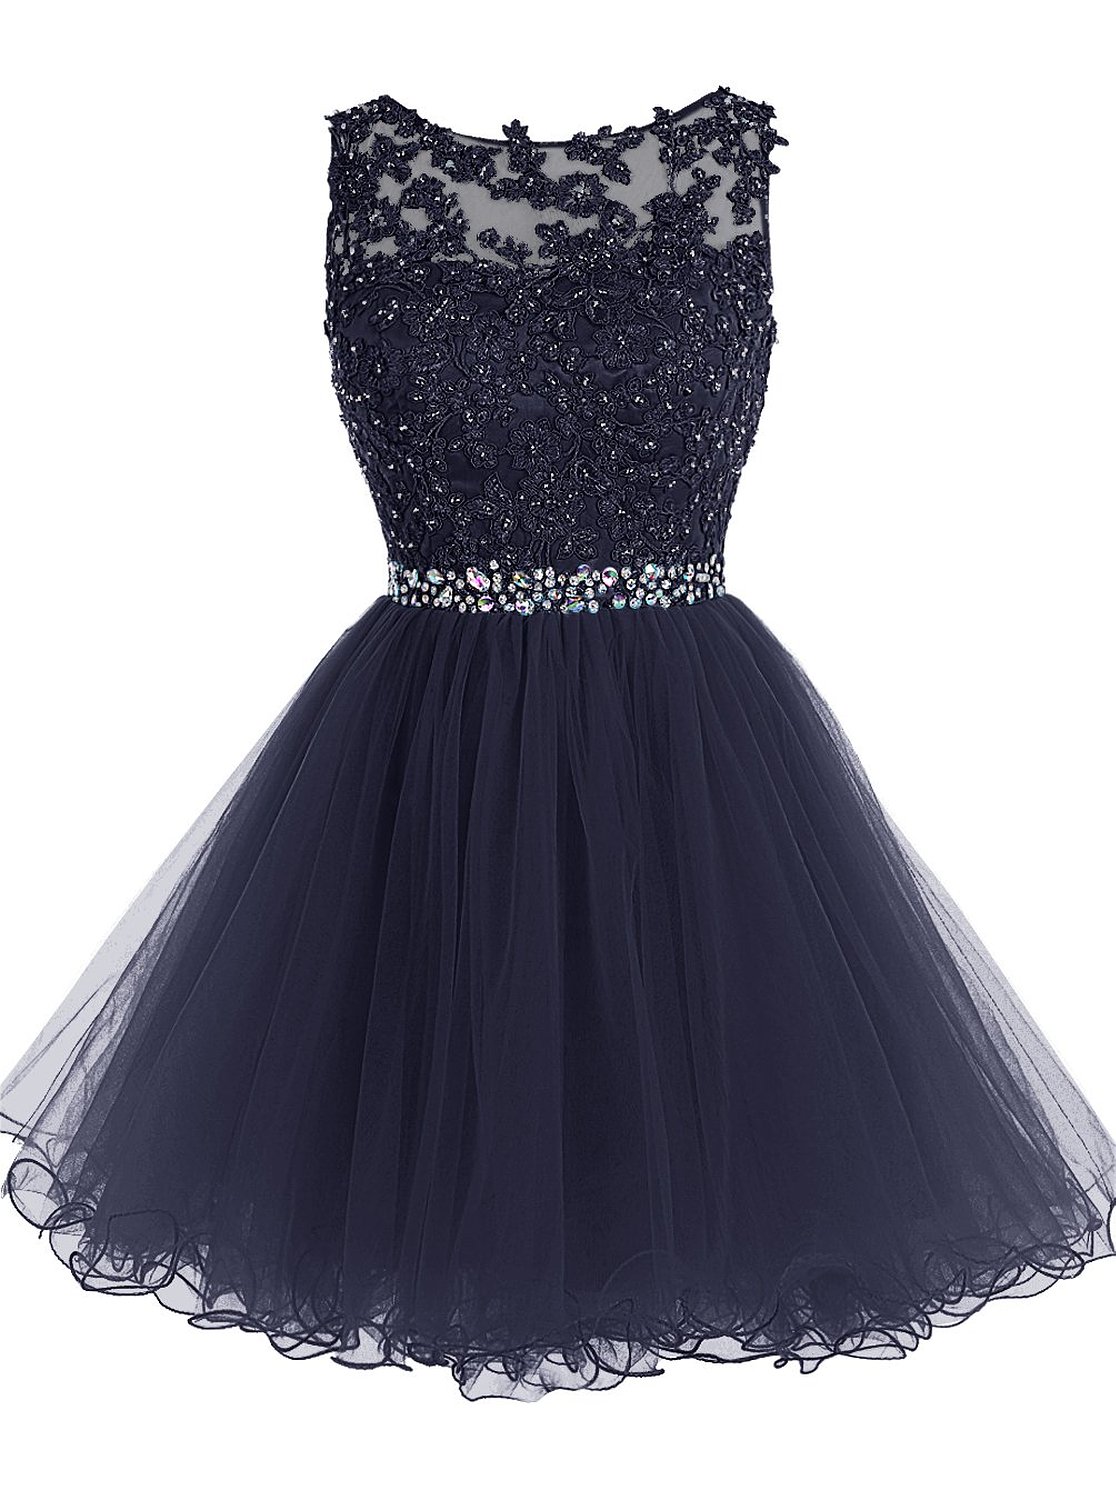 Short Beaded Prom Dress Tulle Applique Evening Dress Navy, Short Homecoming Dresses, Party Dresses, Navy Prom Dress